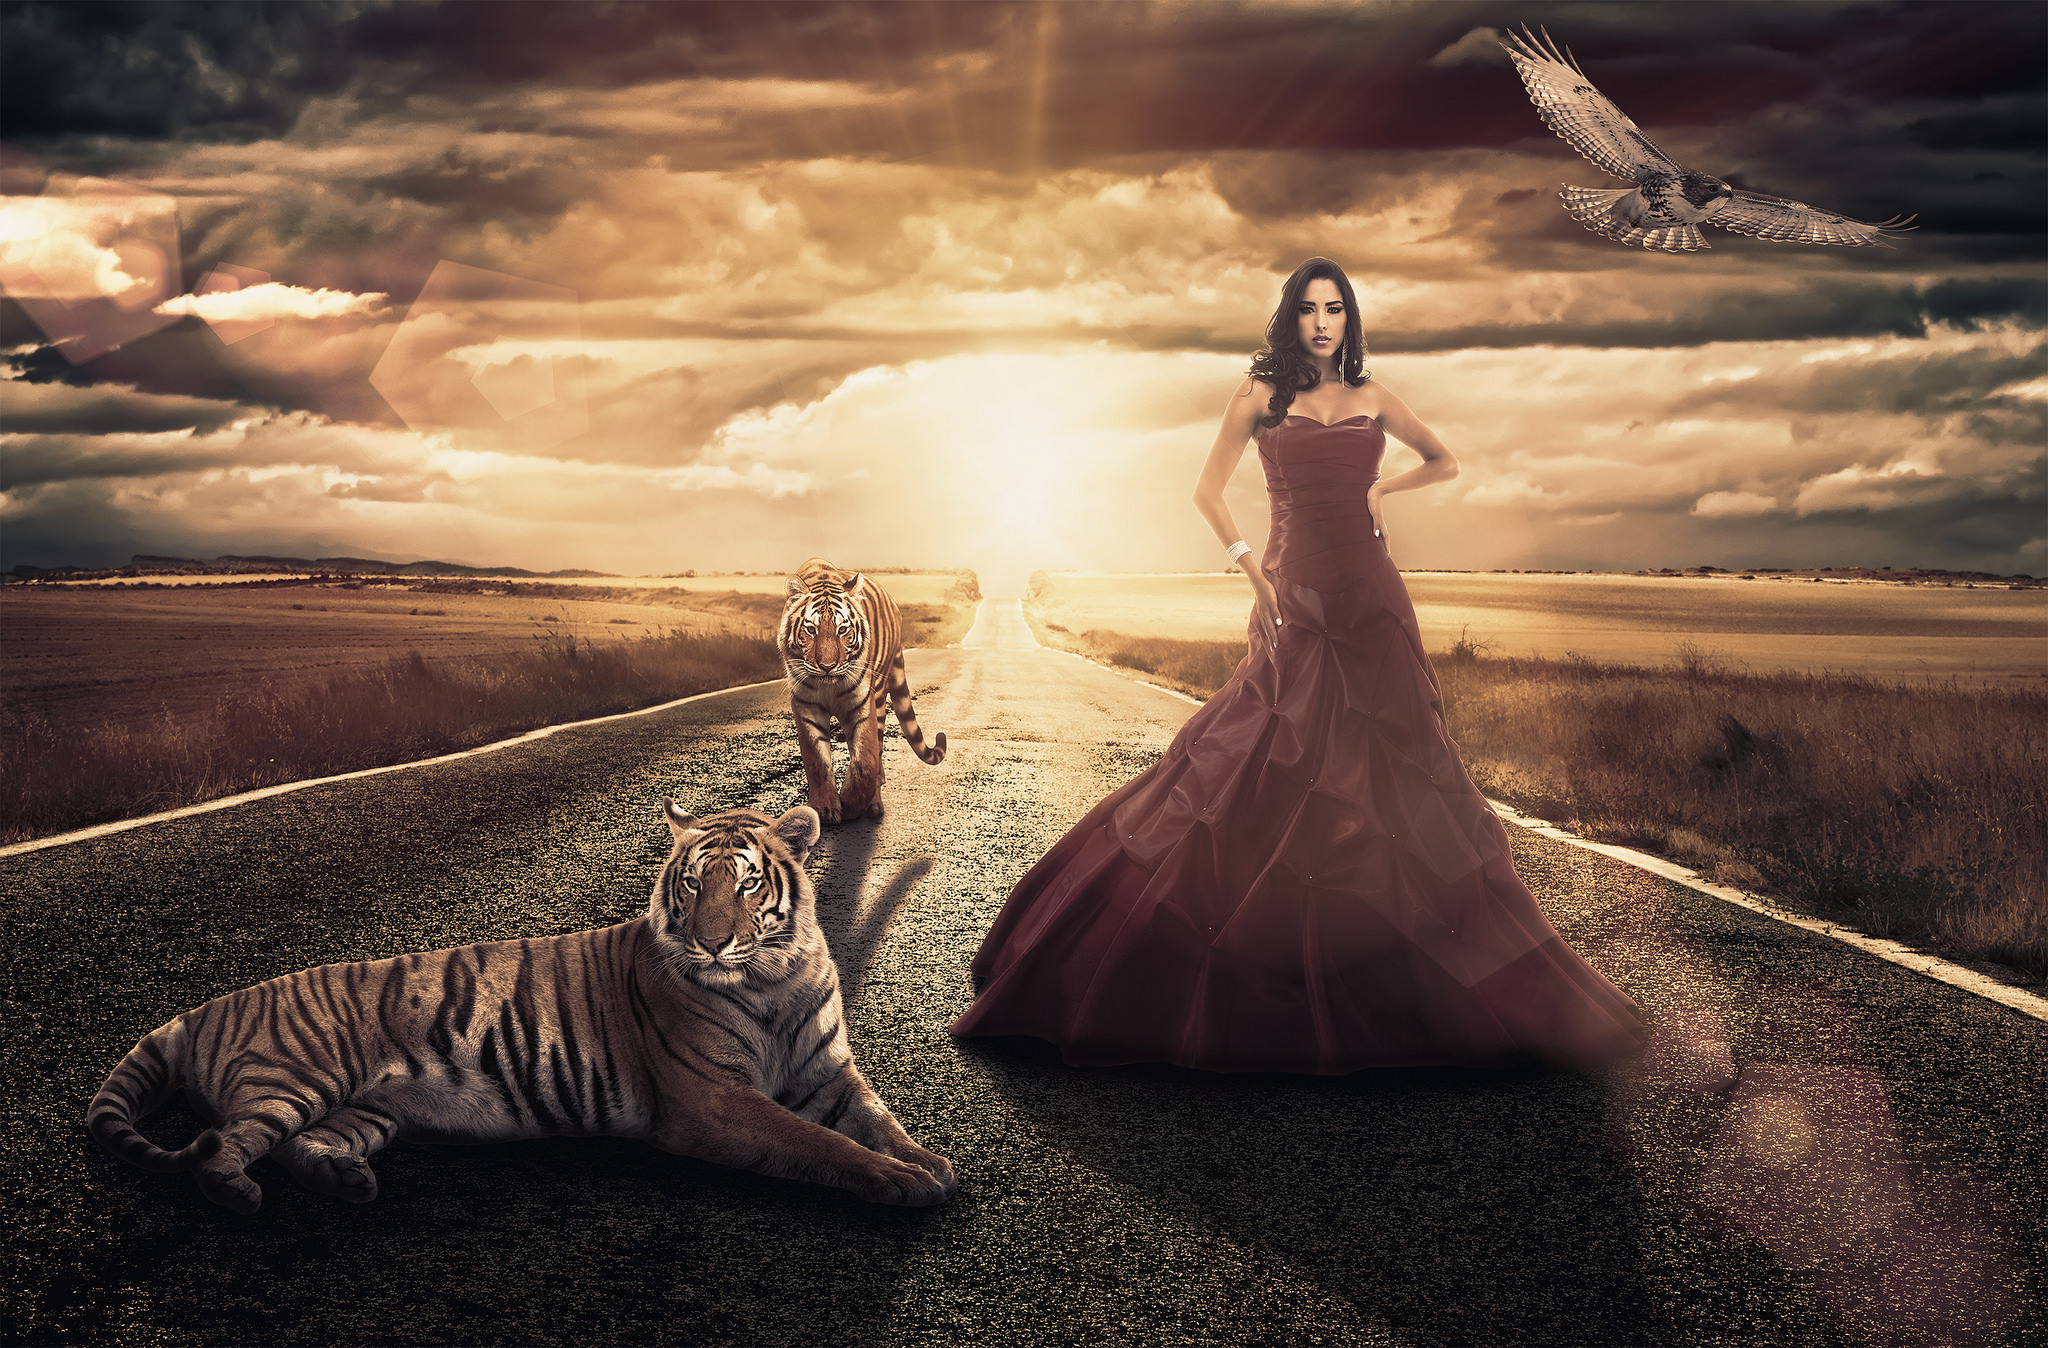 Woman with animals. Тигр и девушка. Девушка с тигром картинки. Девушка пантера. Девушка с тигром фэнтези.